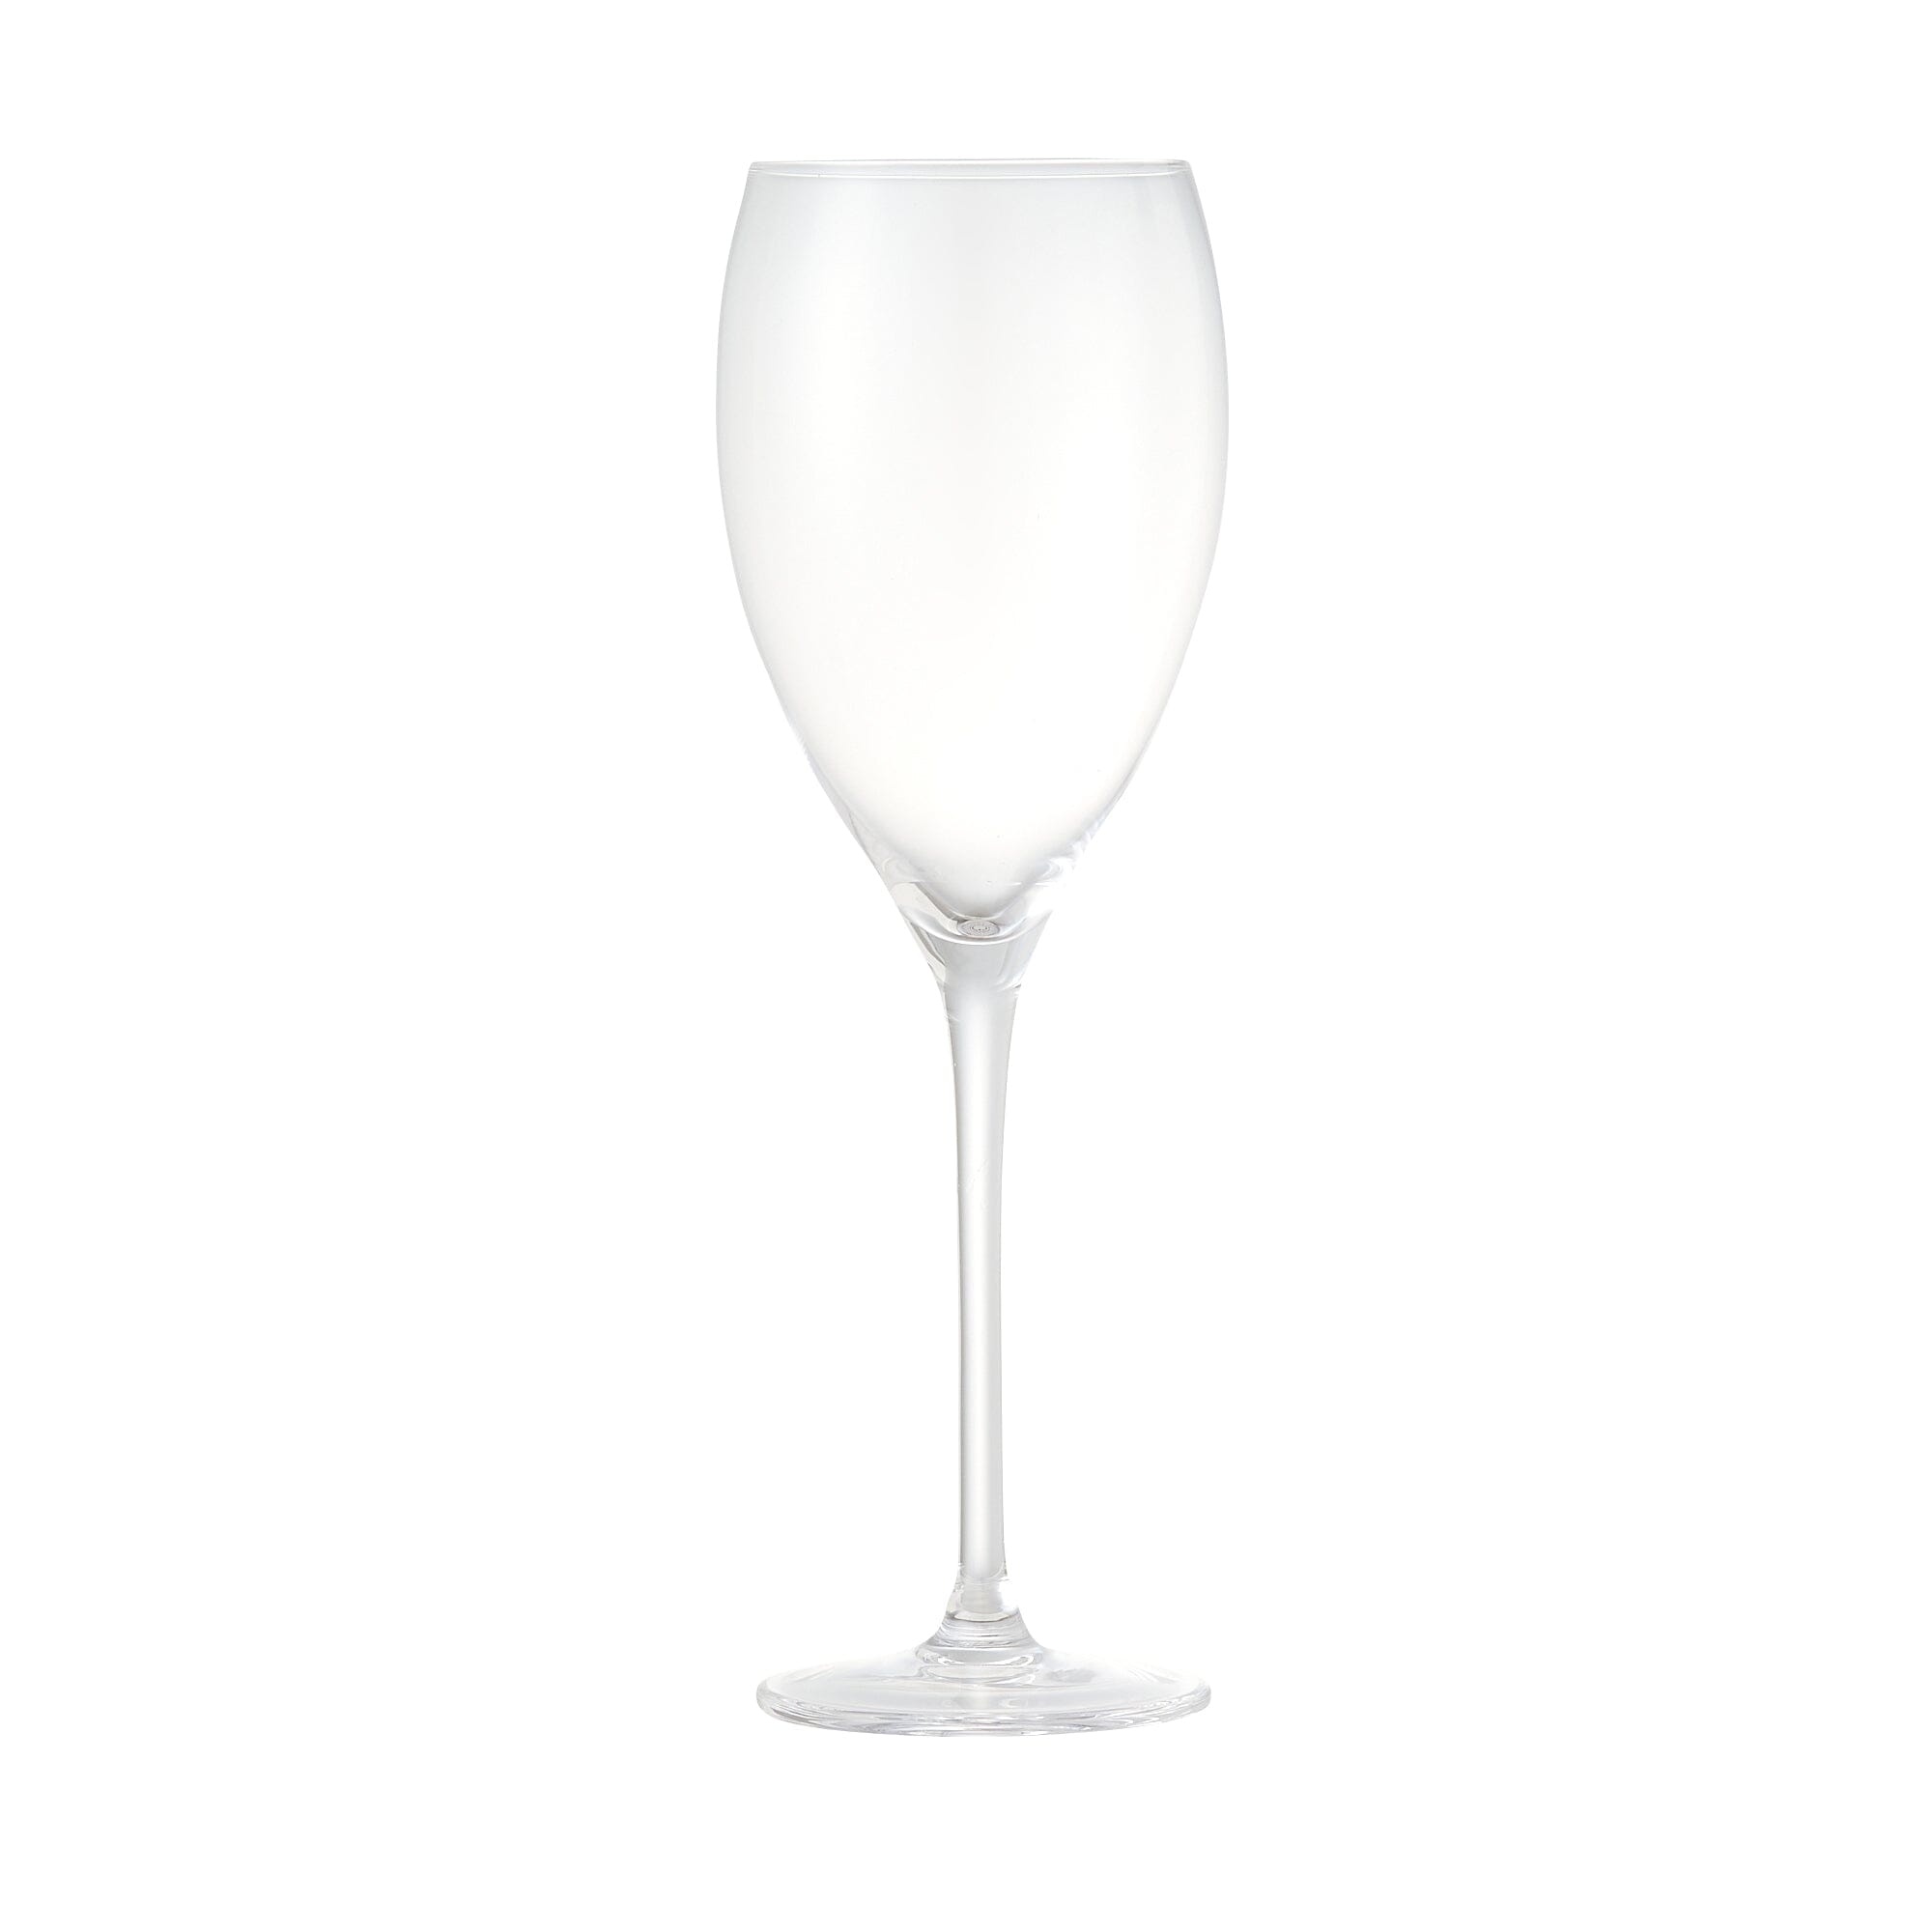 CLEAR WHITE WINE GLASS 2P